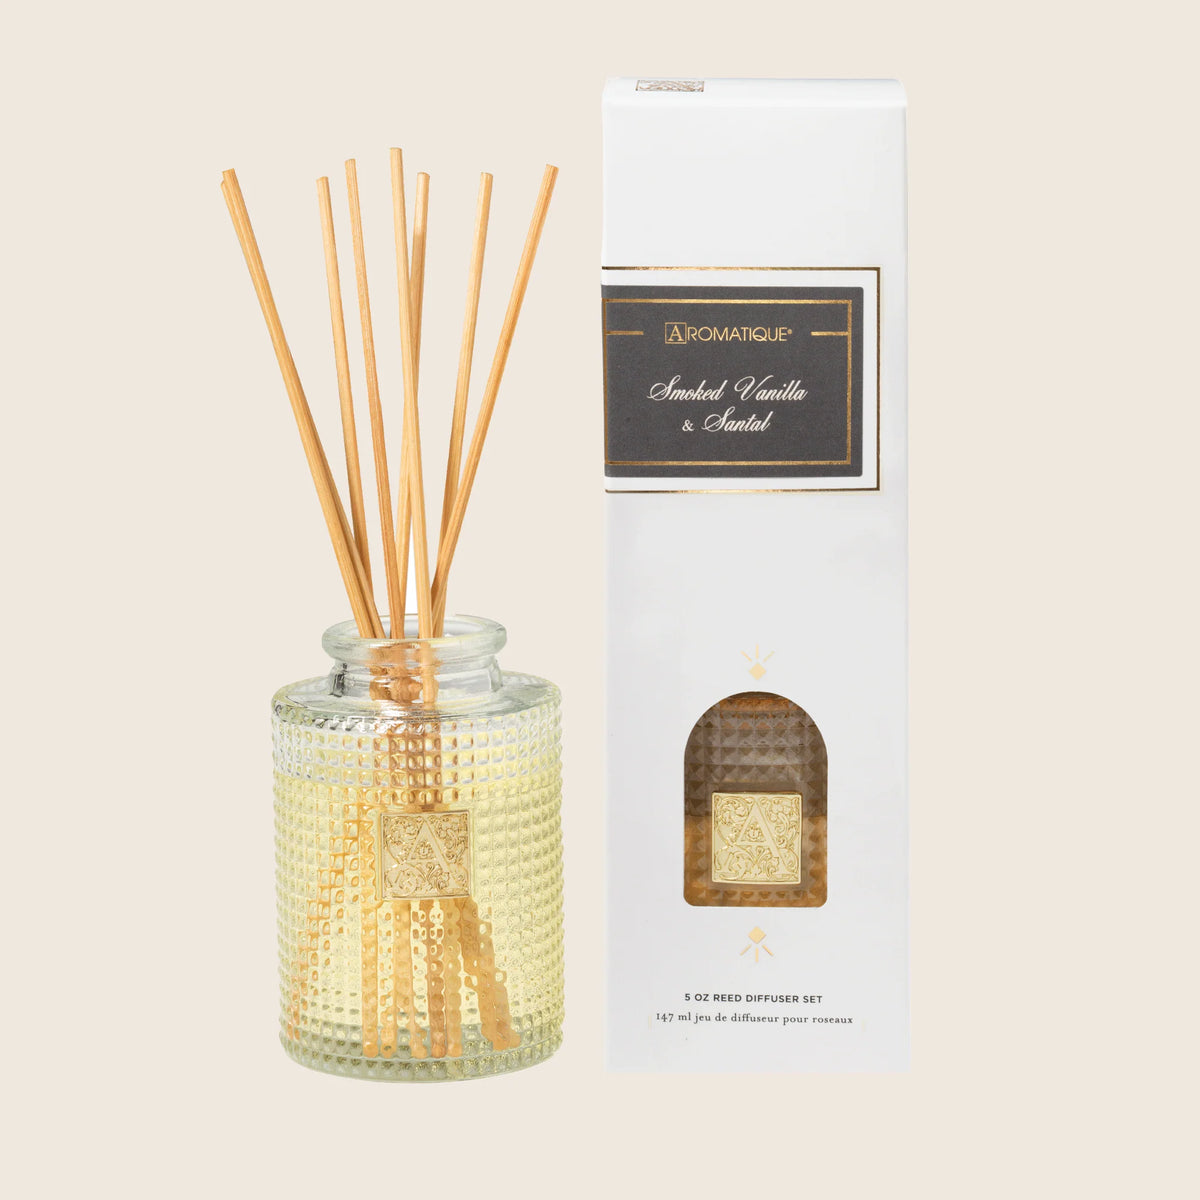 Aromatique - Smoked Vanilla & Santal Reed Diffuser Set